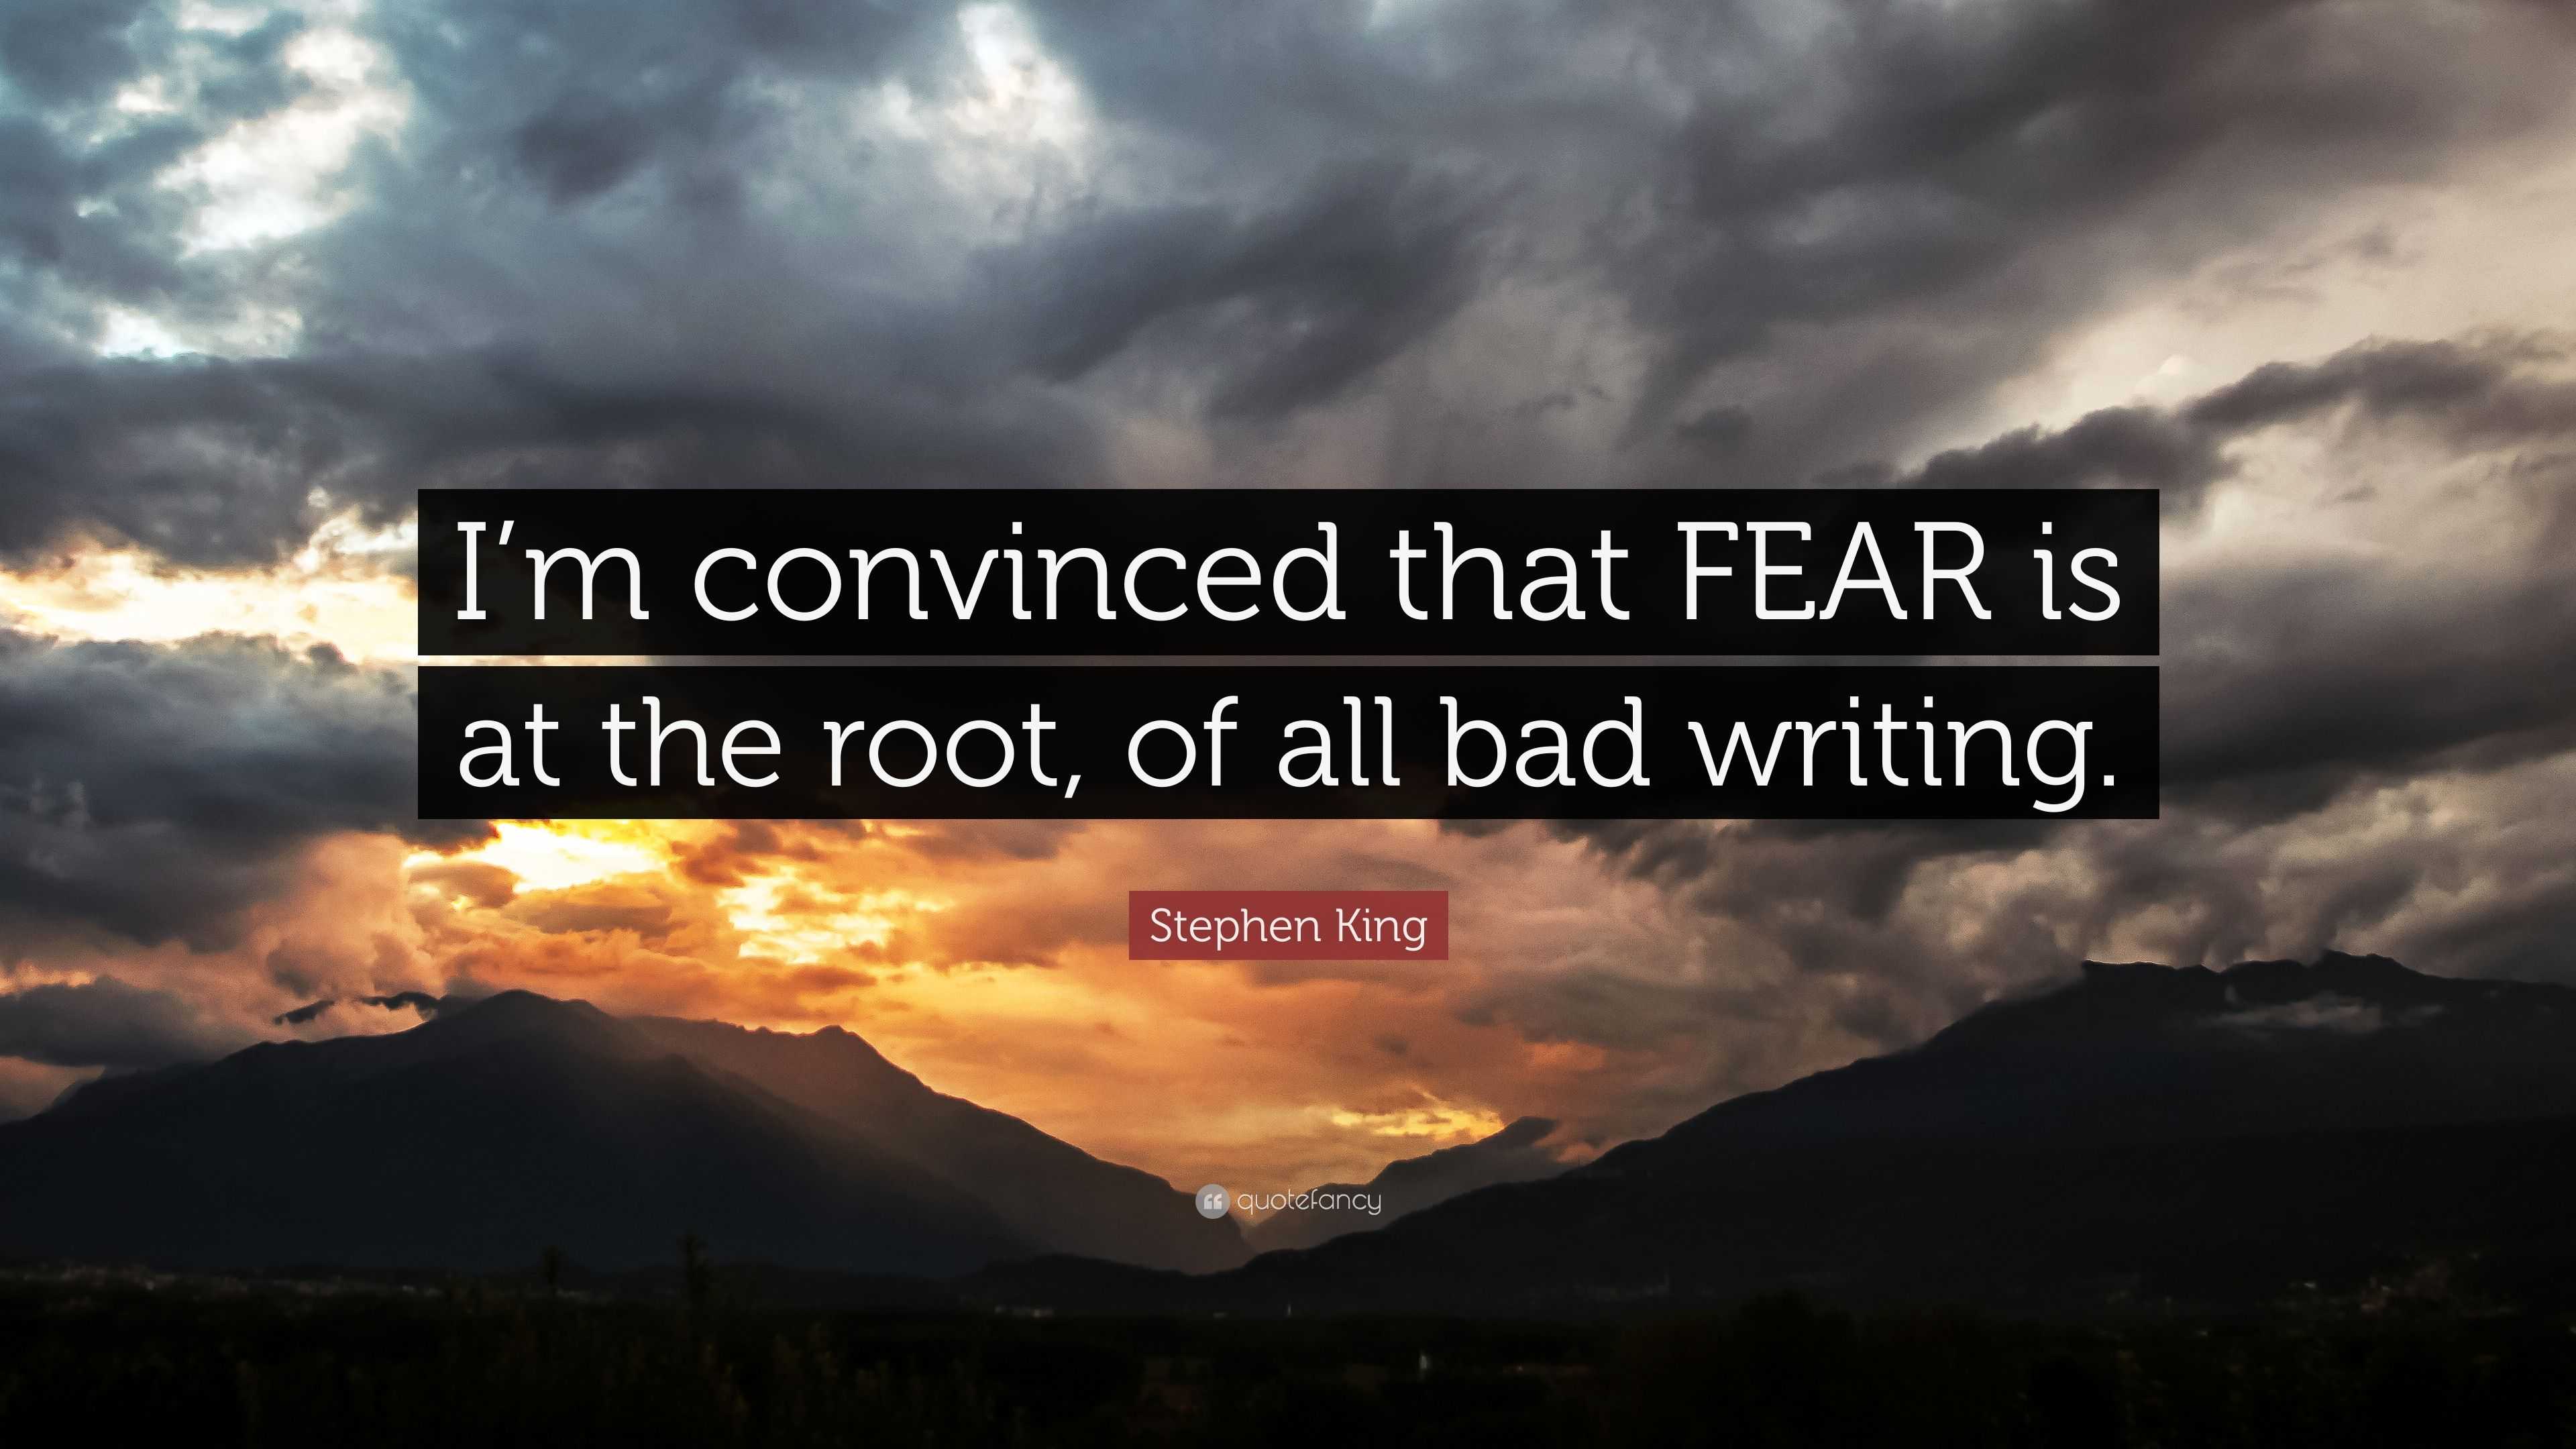 stephen king on fear essay